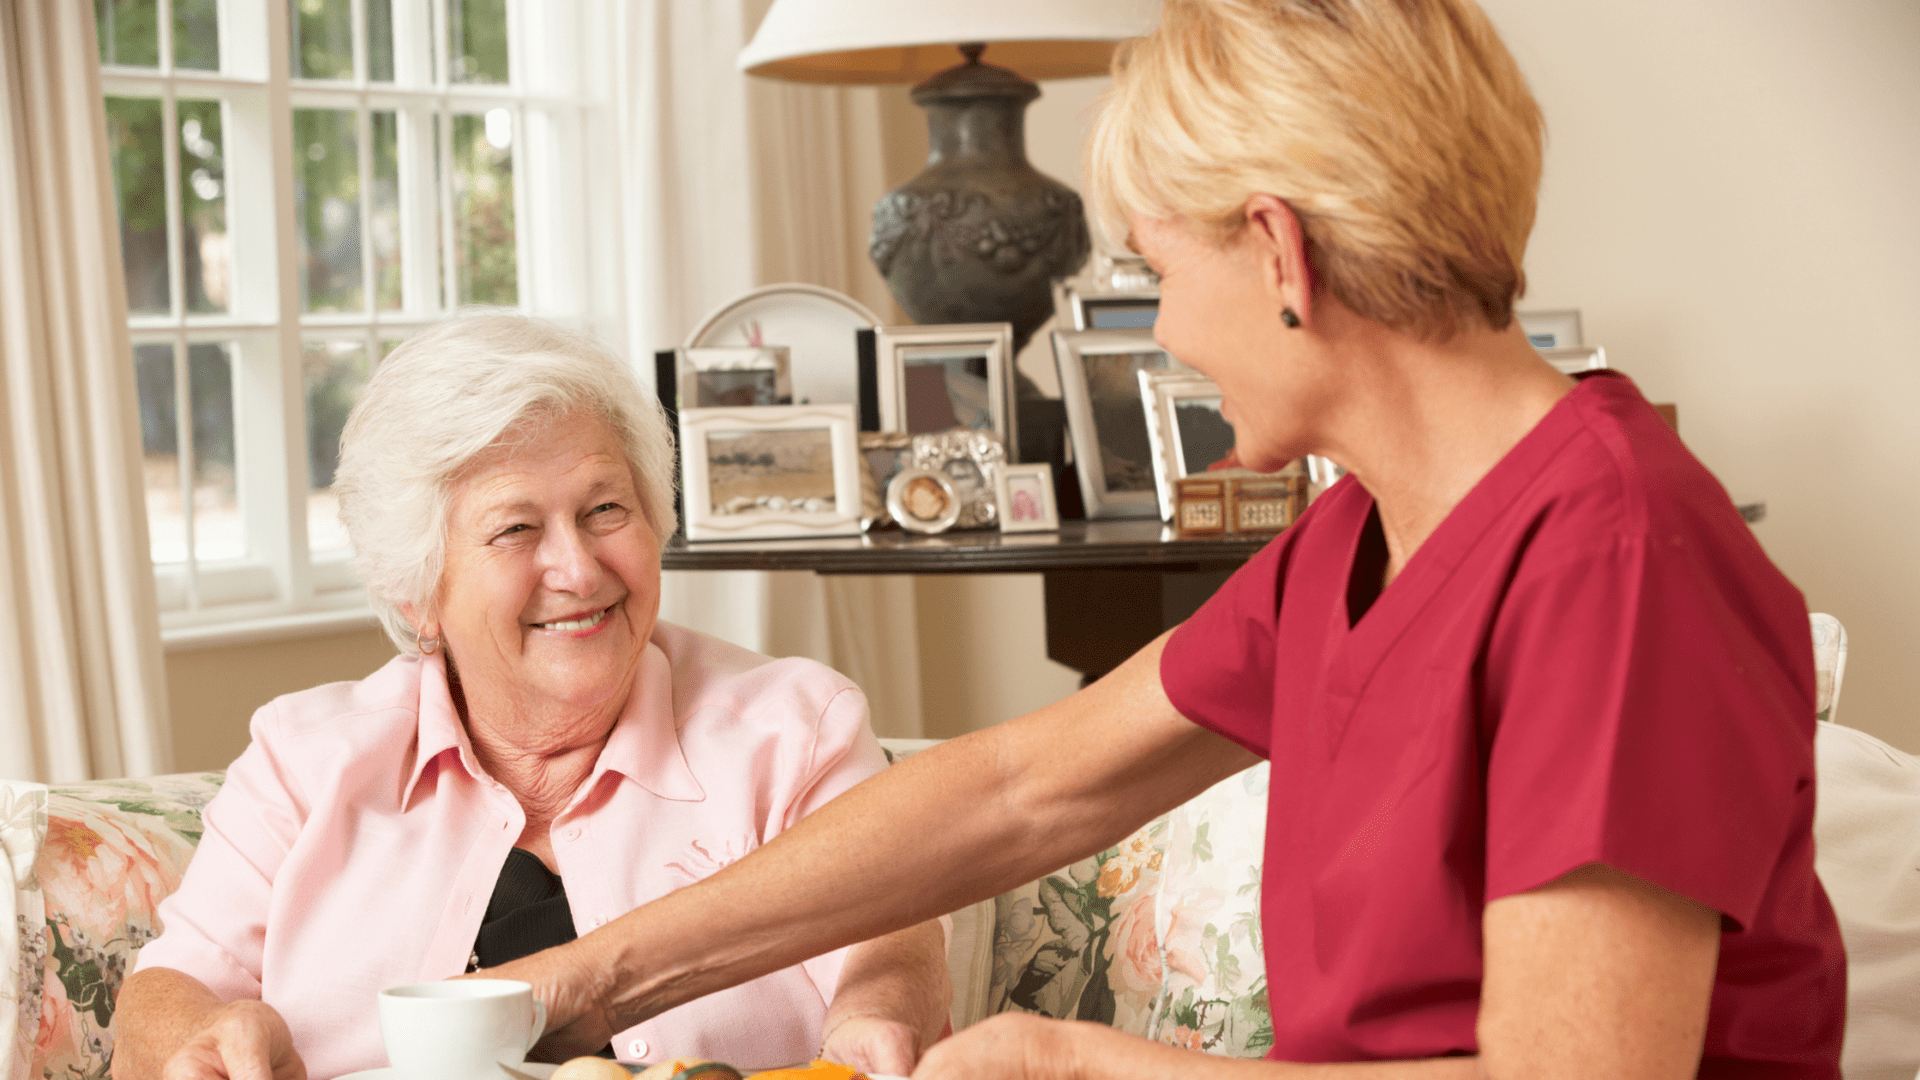 women smiling at an older woman